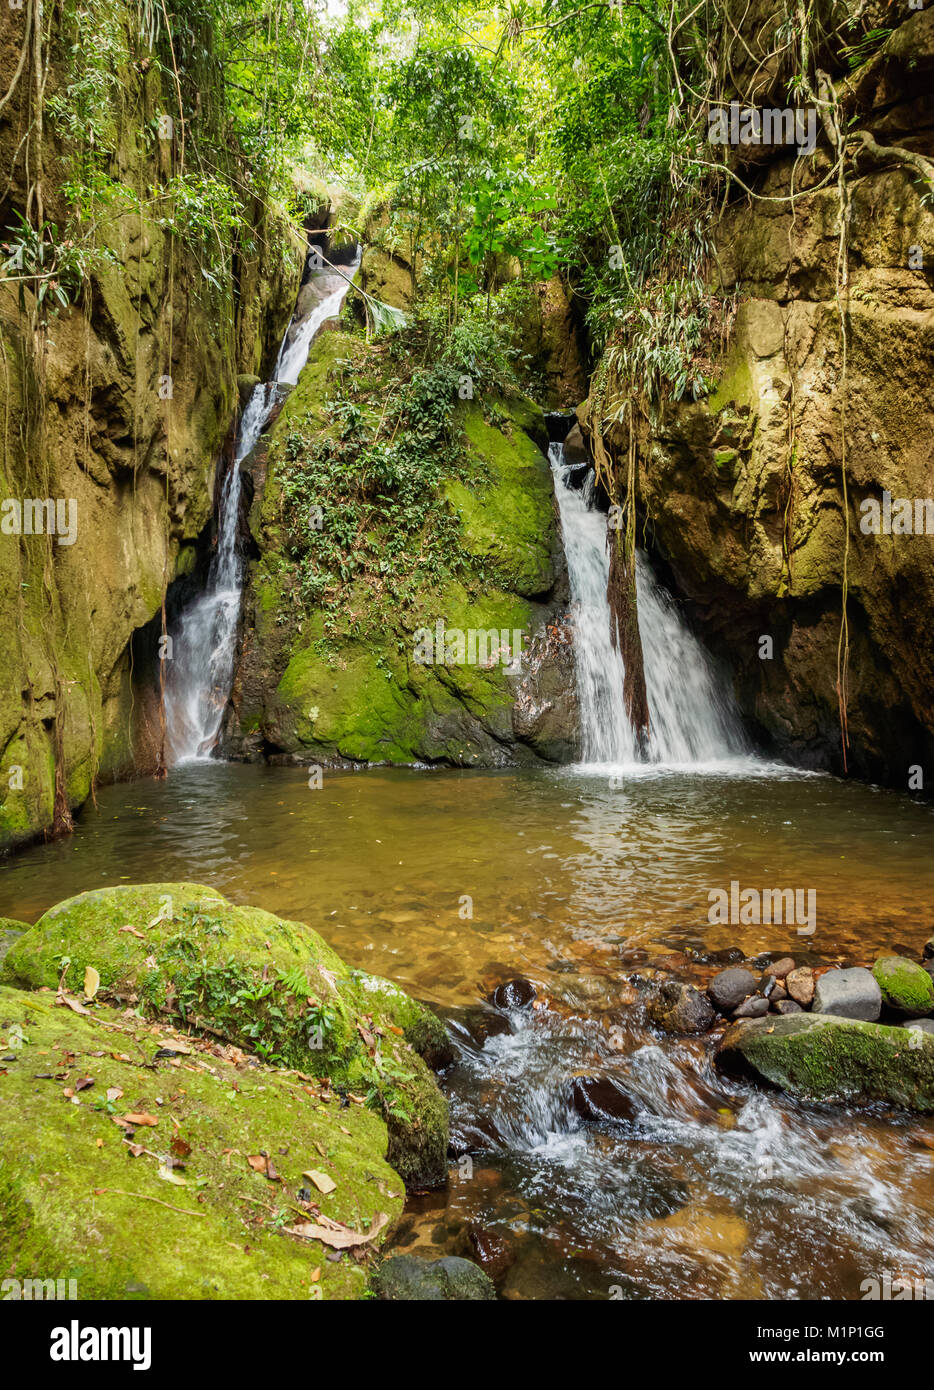 Cachoeira Indiana Jones, waterfall in Boa Esperanca de Cima, Nova Friburgo Municipality, State of Rio de Janeiro, Brazil, South America Stock Photo